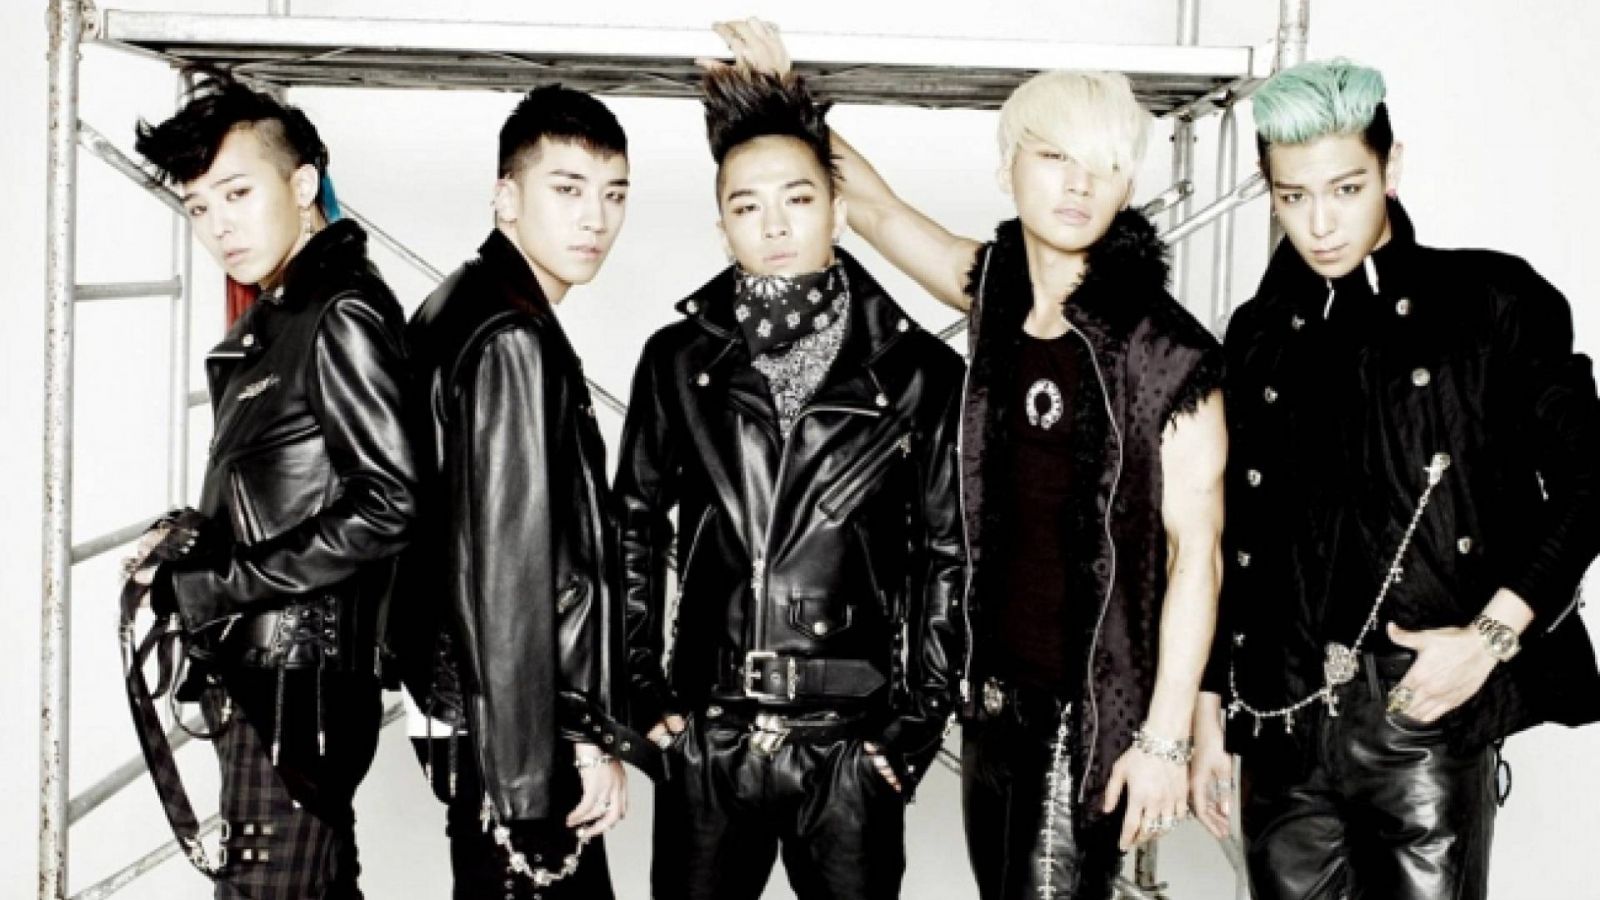 Detalles del concierto de BIGBANG en Perú © YG Entertainment